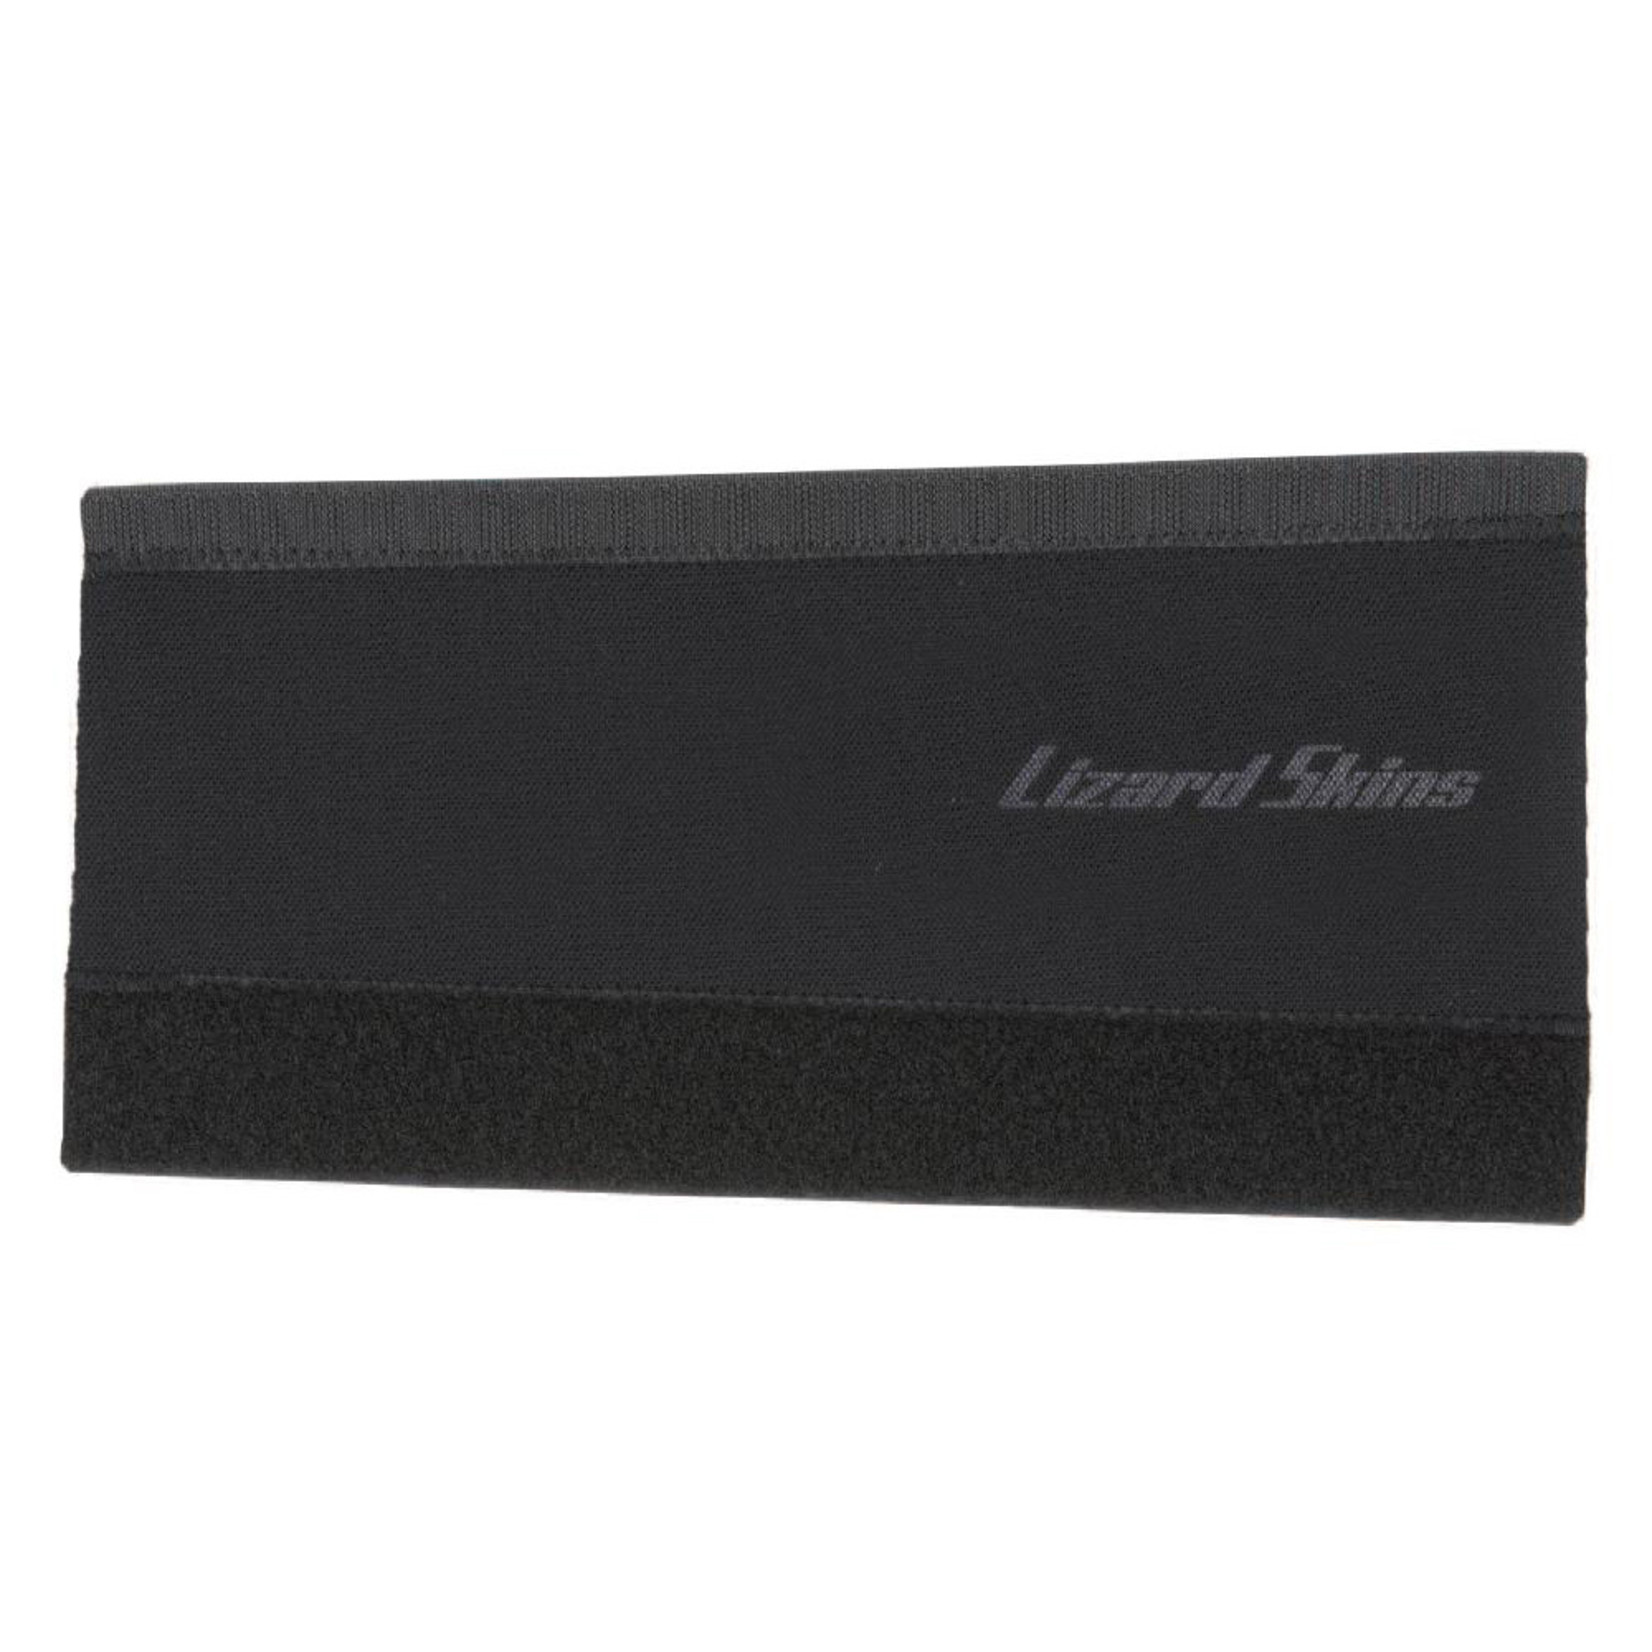 Lizard Skin Lizard Skins Neoprene Chainstay Protectors - 130mm - Medium - Black